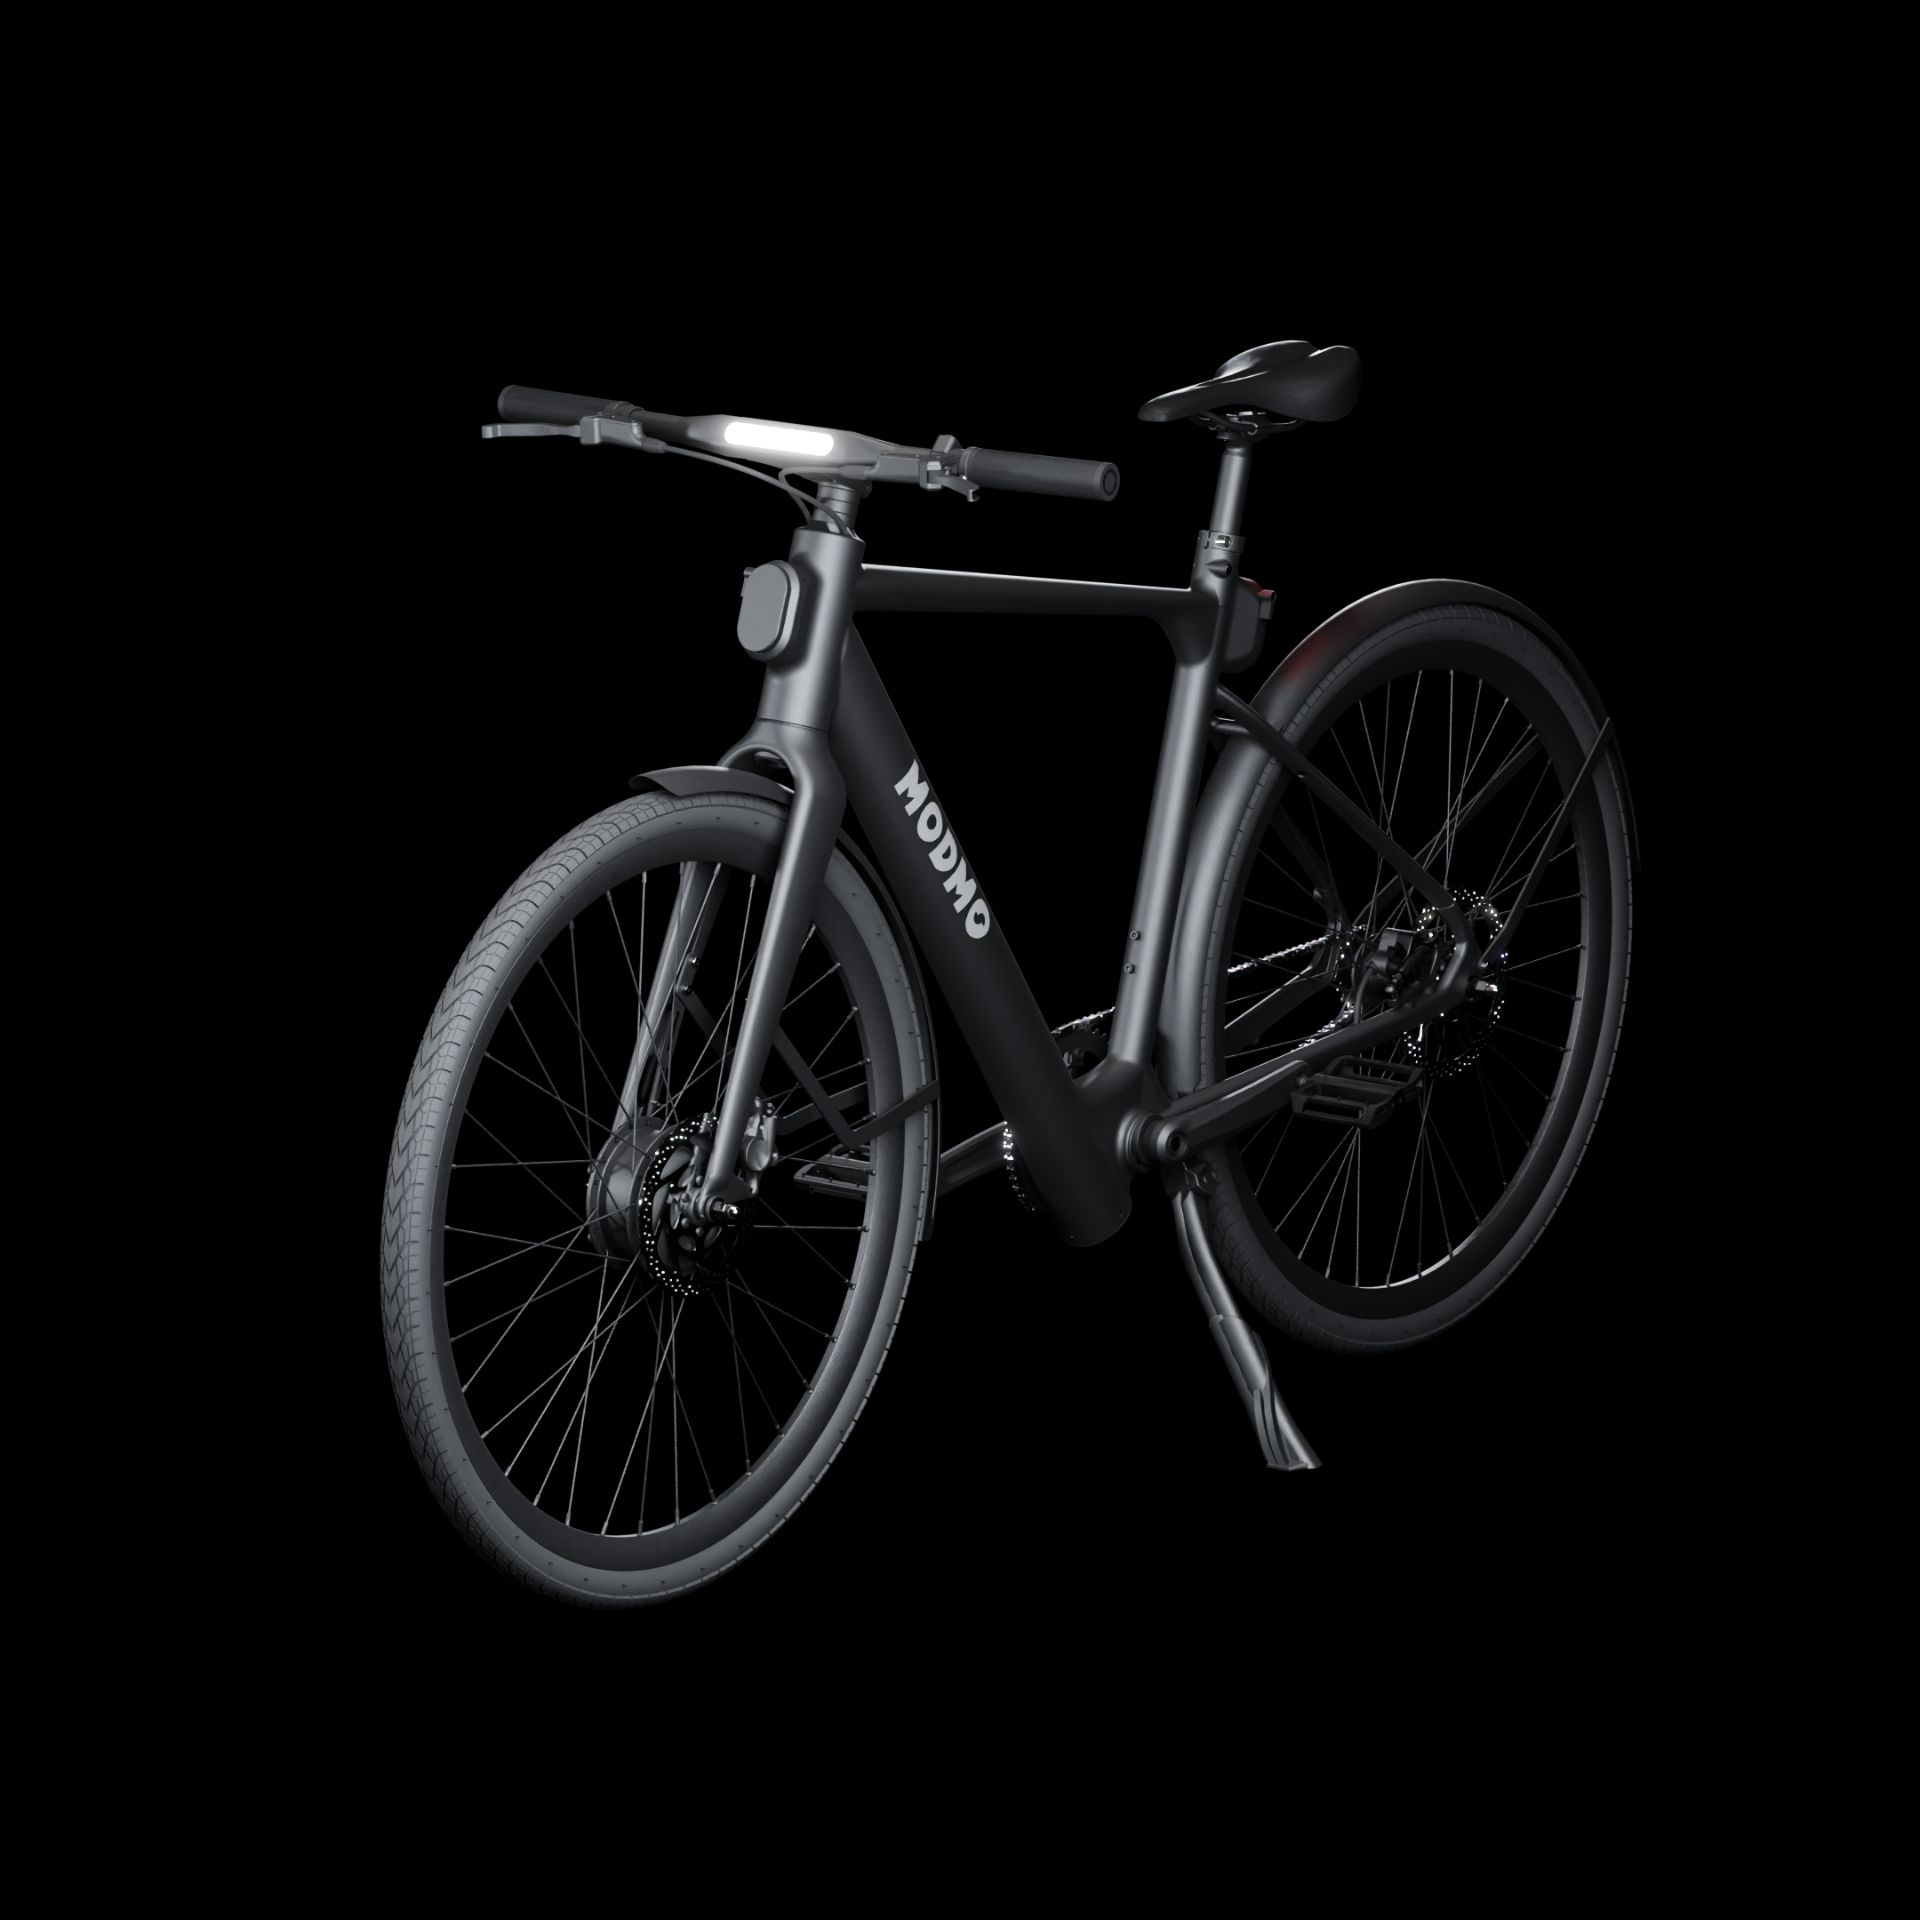 Modmo Saigon+ Electric Bicycle - RRP £2800 - Size M (Rider: 155-175cm) - Image 4 of 18